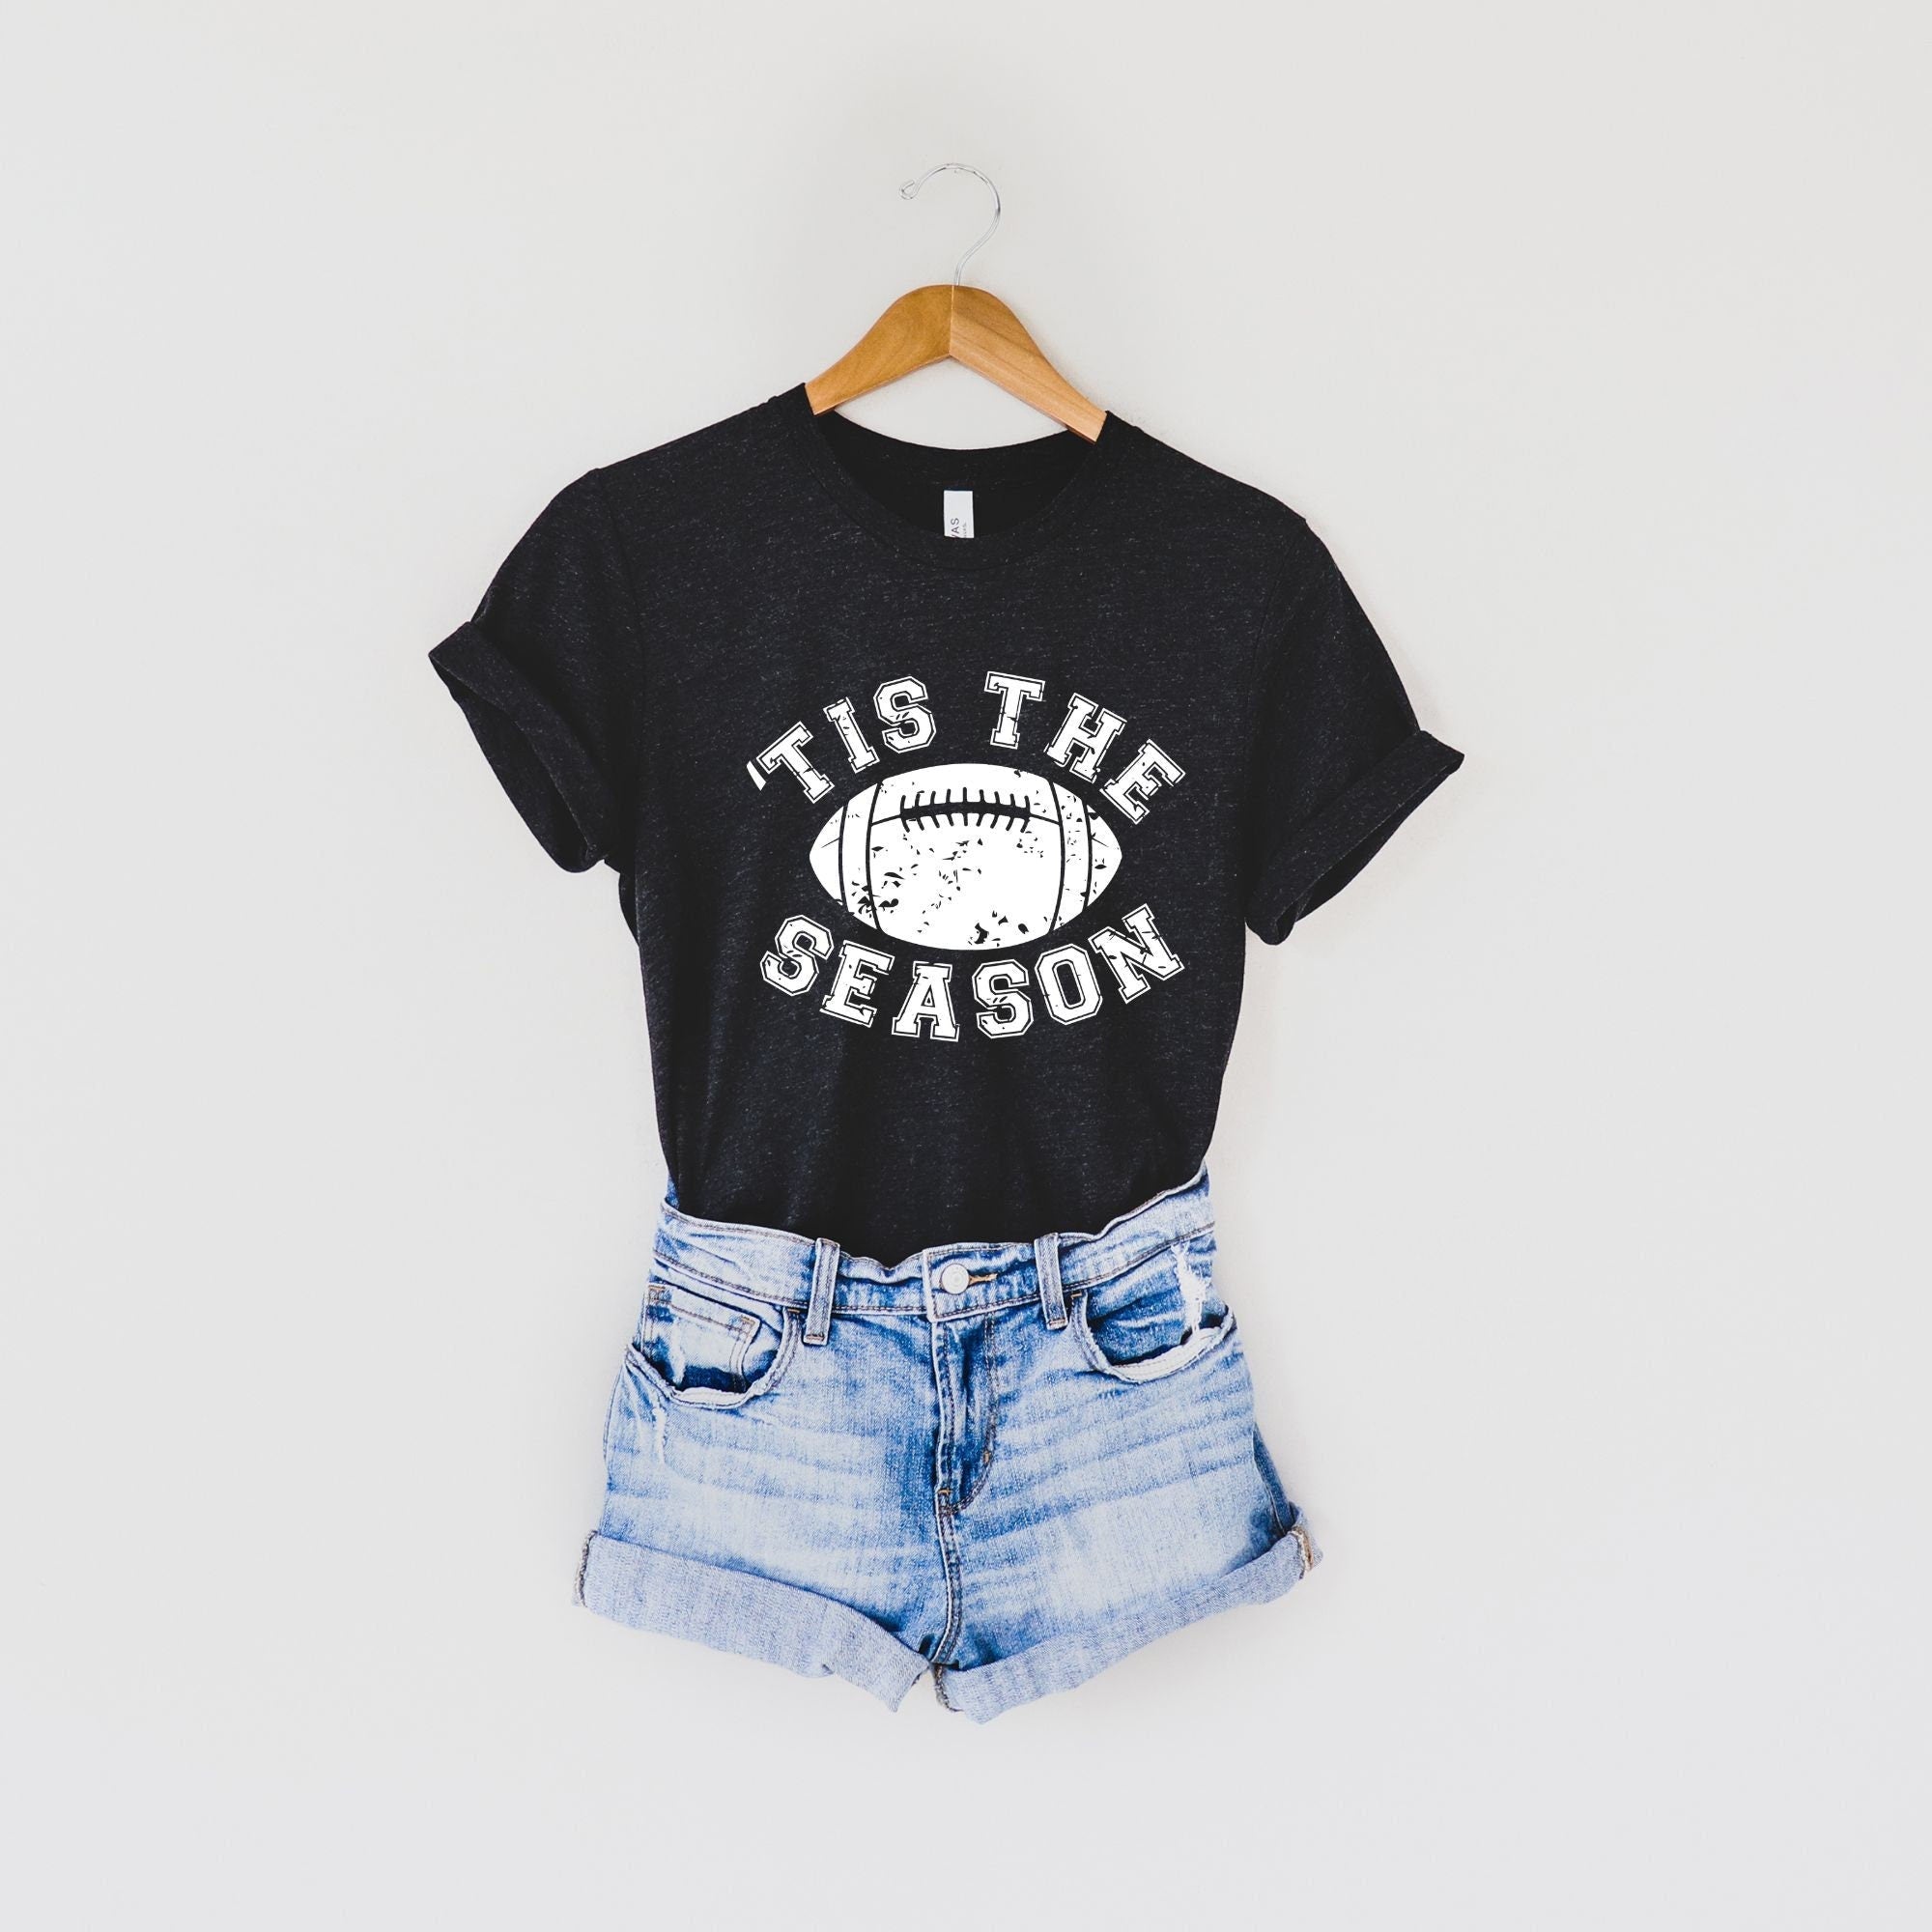 Tis The Season Football Tshirt for Women *UNISEX FIT*-208 Tees Wholesale, Idaho